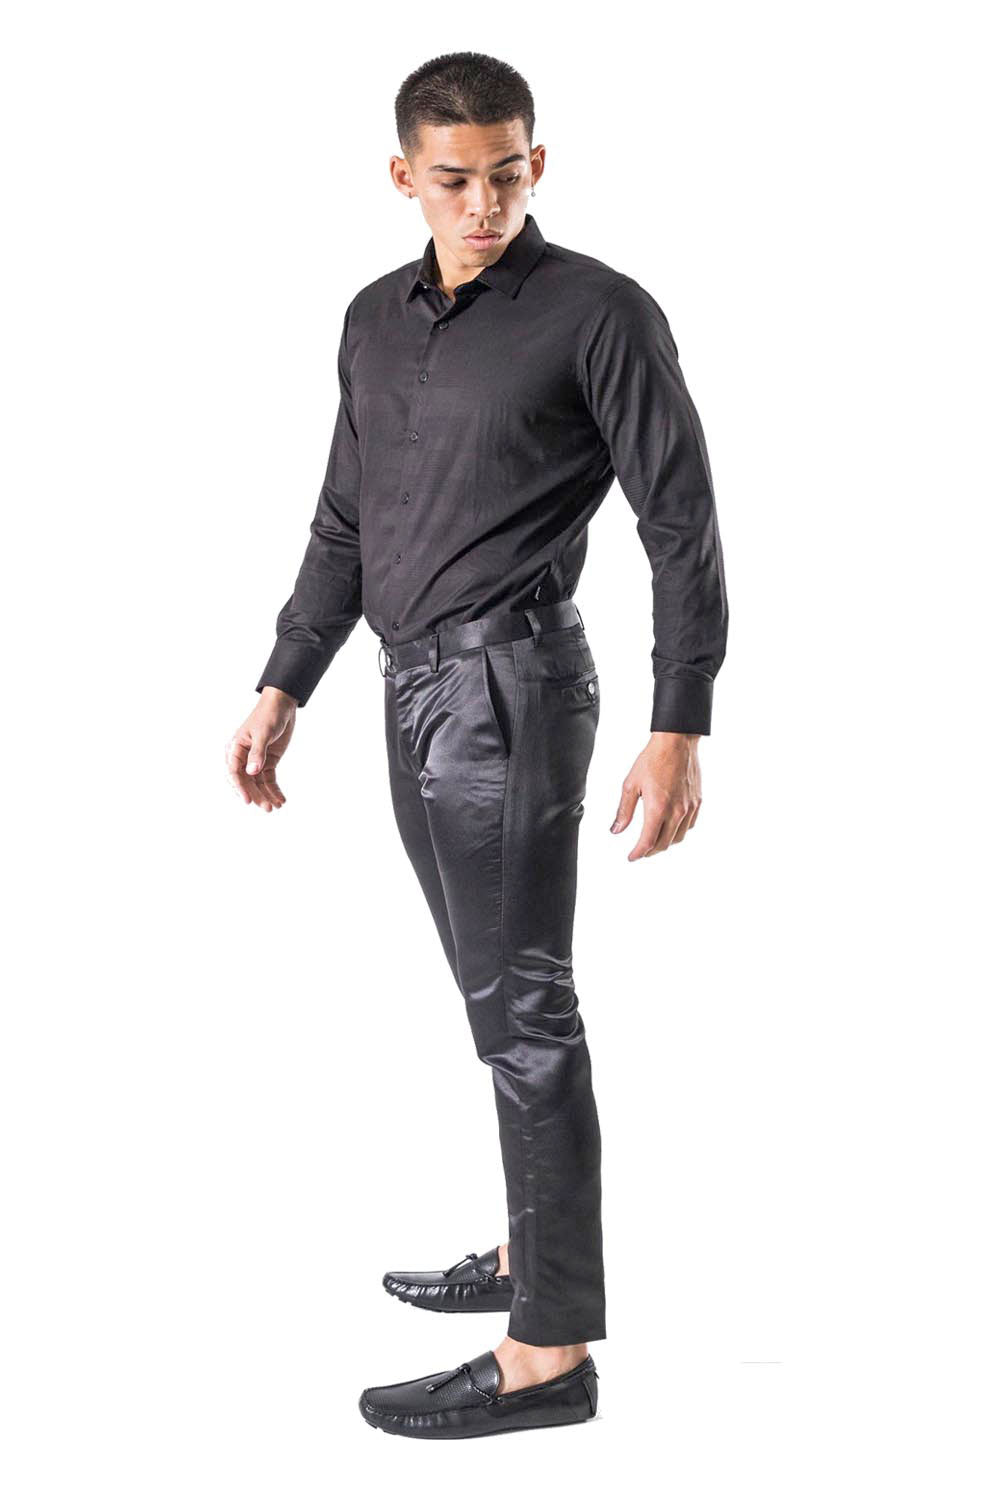 NWT CHAPS Black Gray Pinstripe Flat Front Dress Suit Pants Boy's 16 R  | eBay